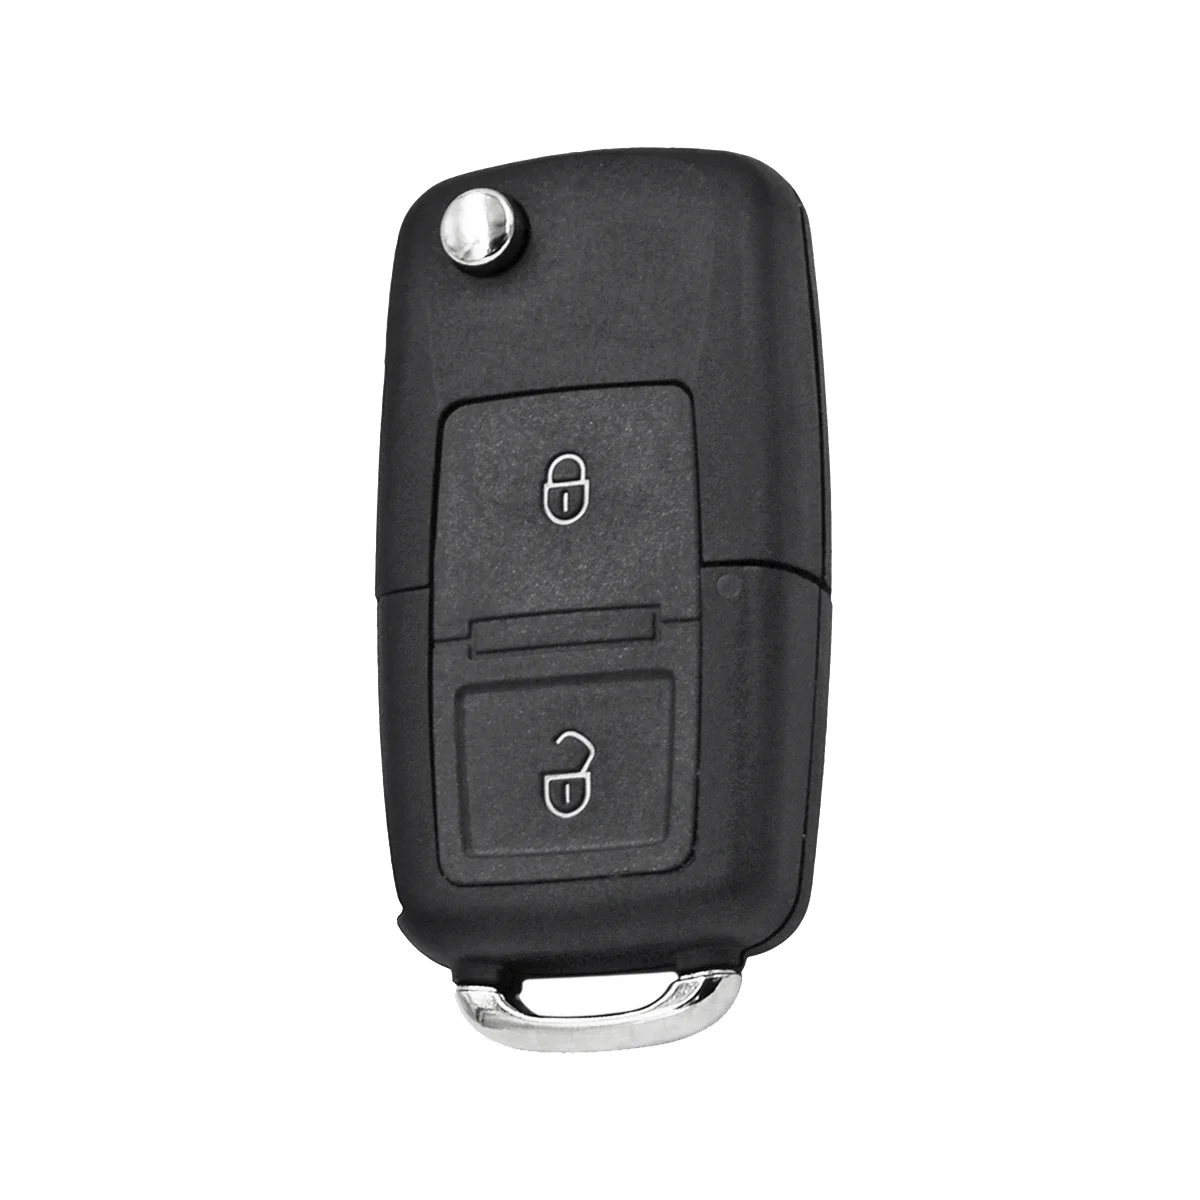 

KEYDIY B01-2 KD Remote Control Car Key Universal 2 Button for VW Style for KD900/KD-X2 KD MINI/ URG200 Programmer